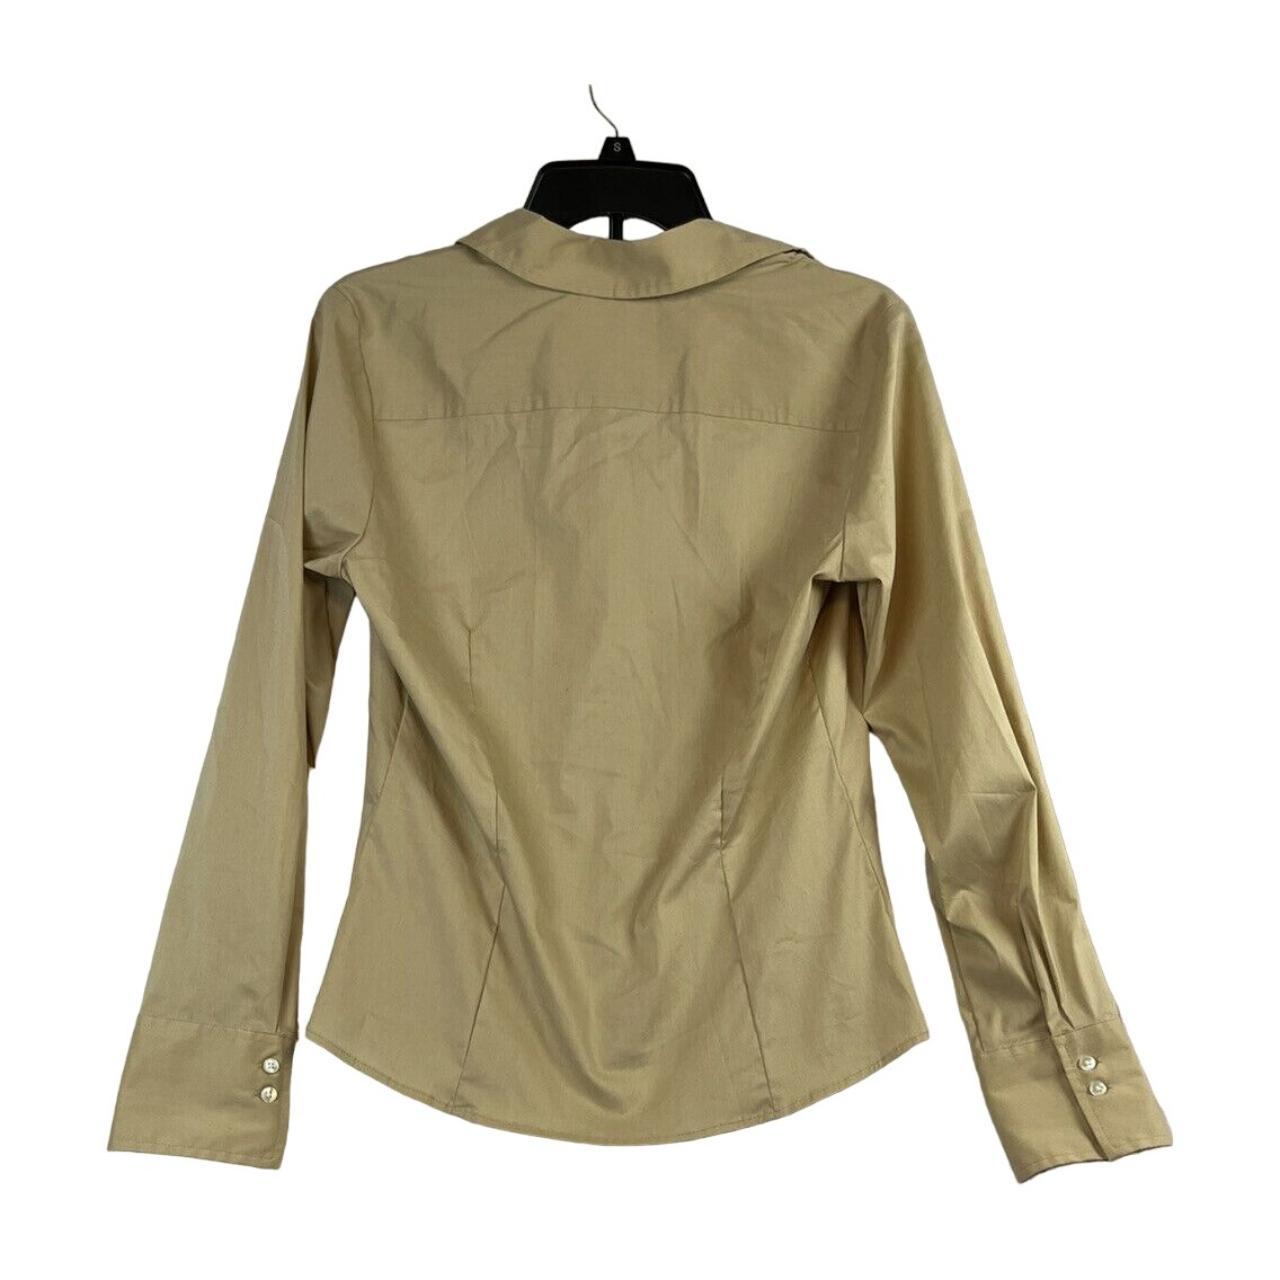 Old Navy Women's button-up shirt in beige khaki,... - Depop